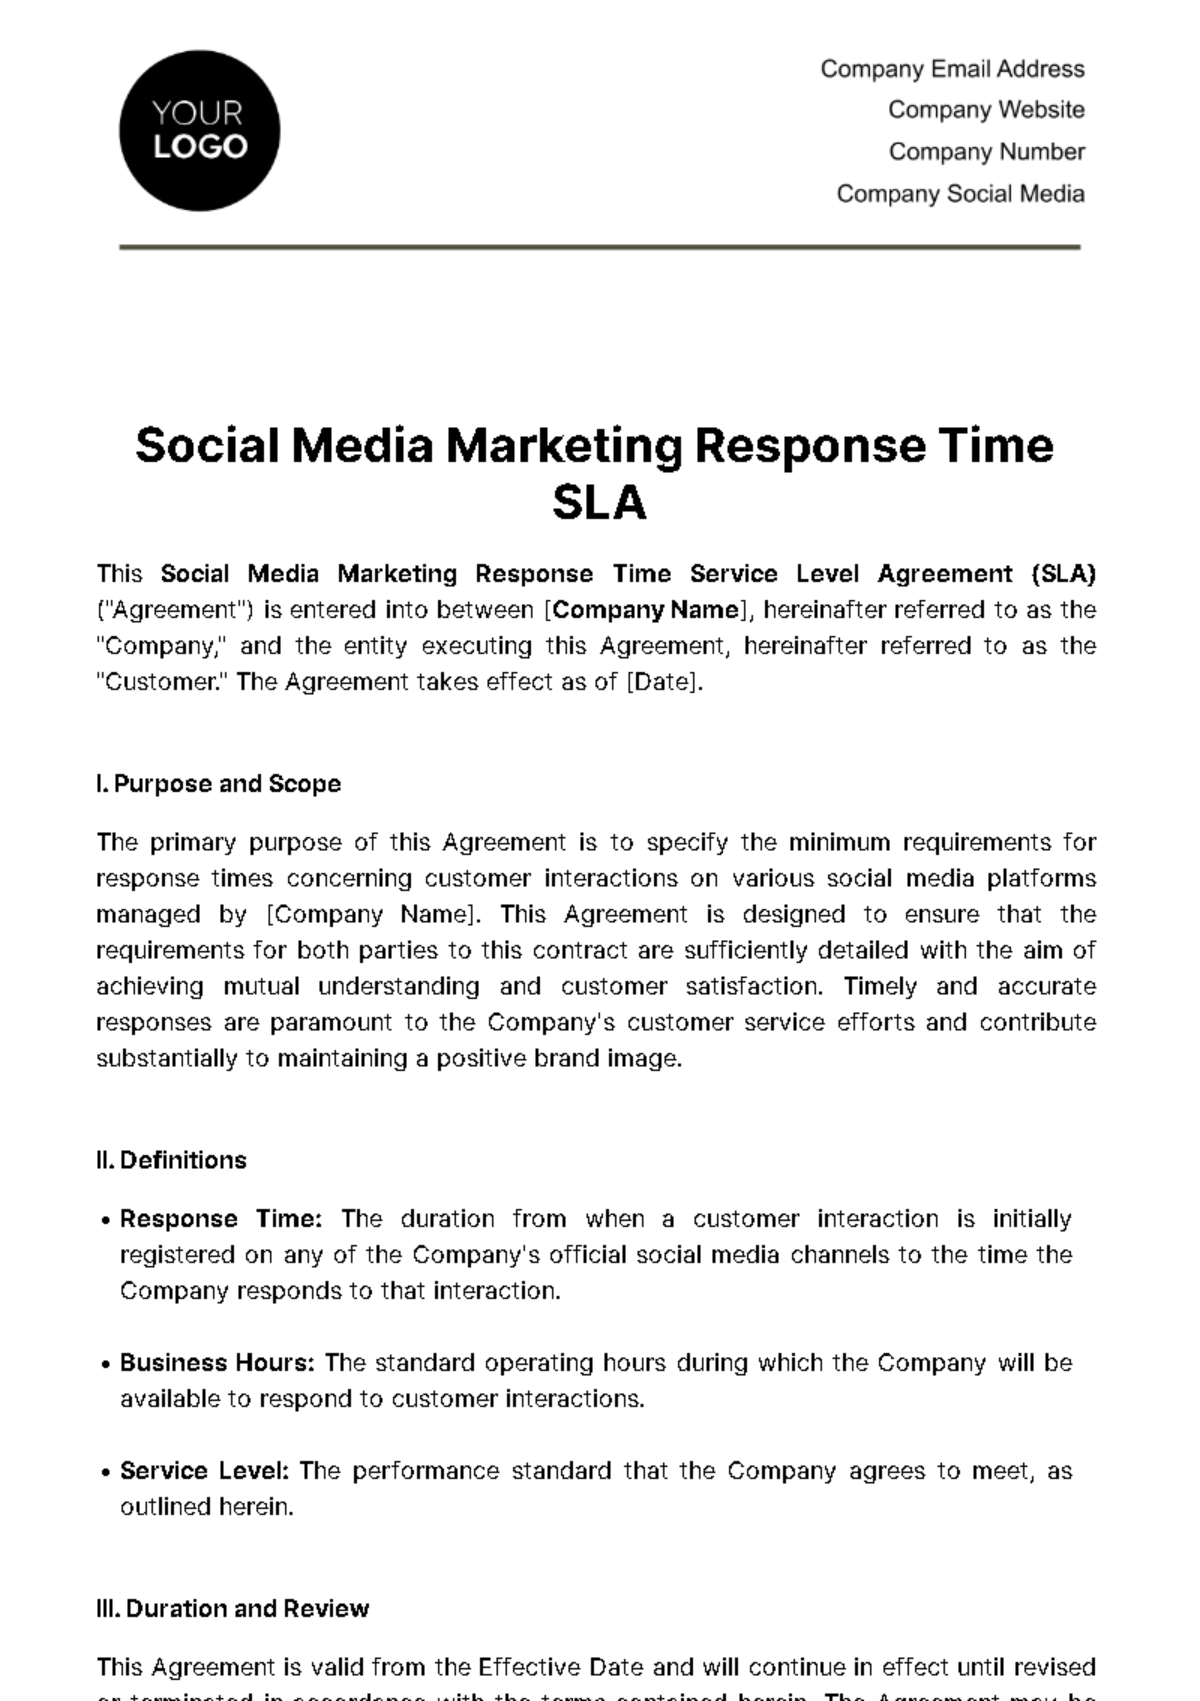 Social Media Marketing Response Time SLA Template